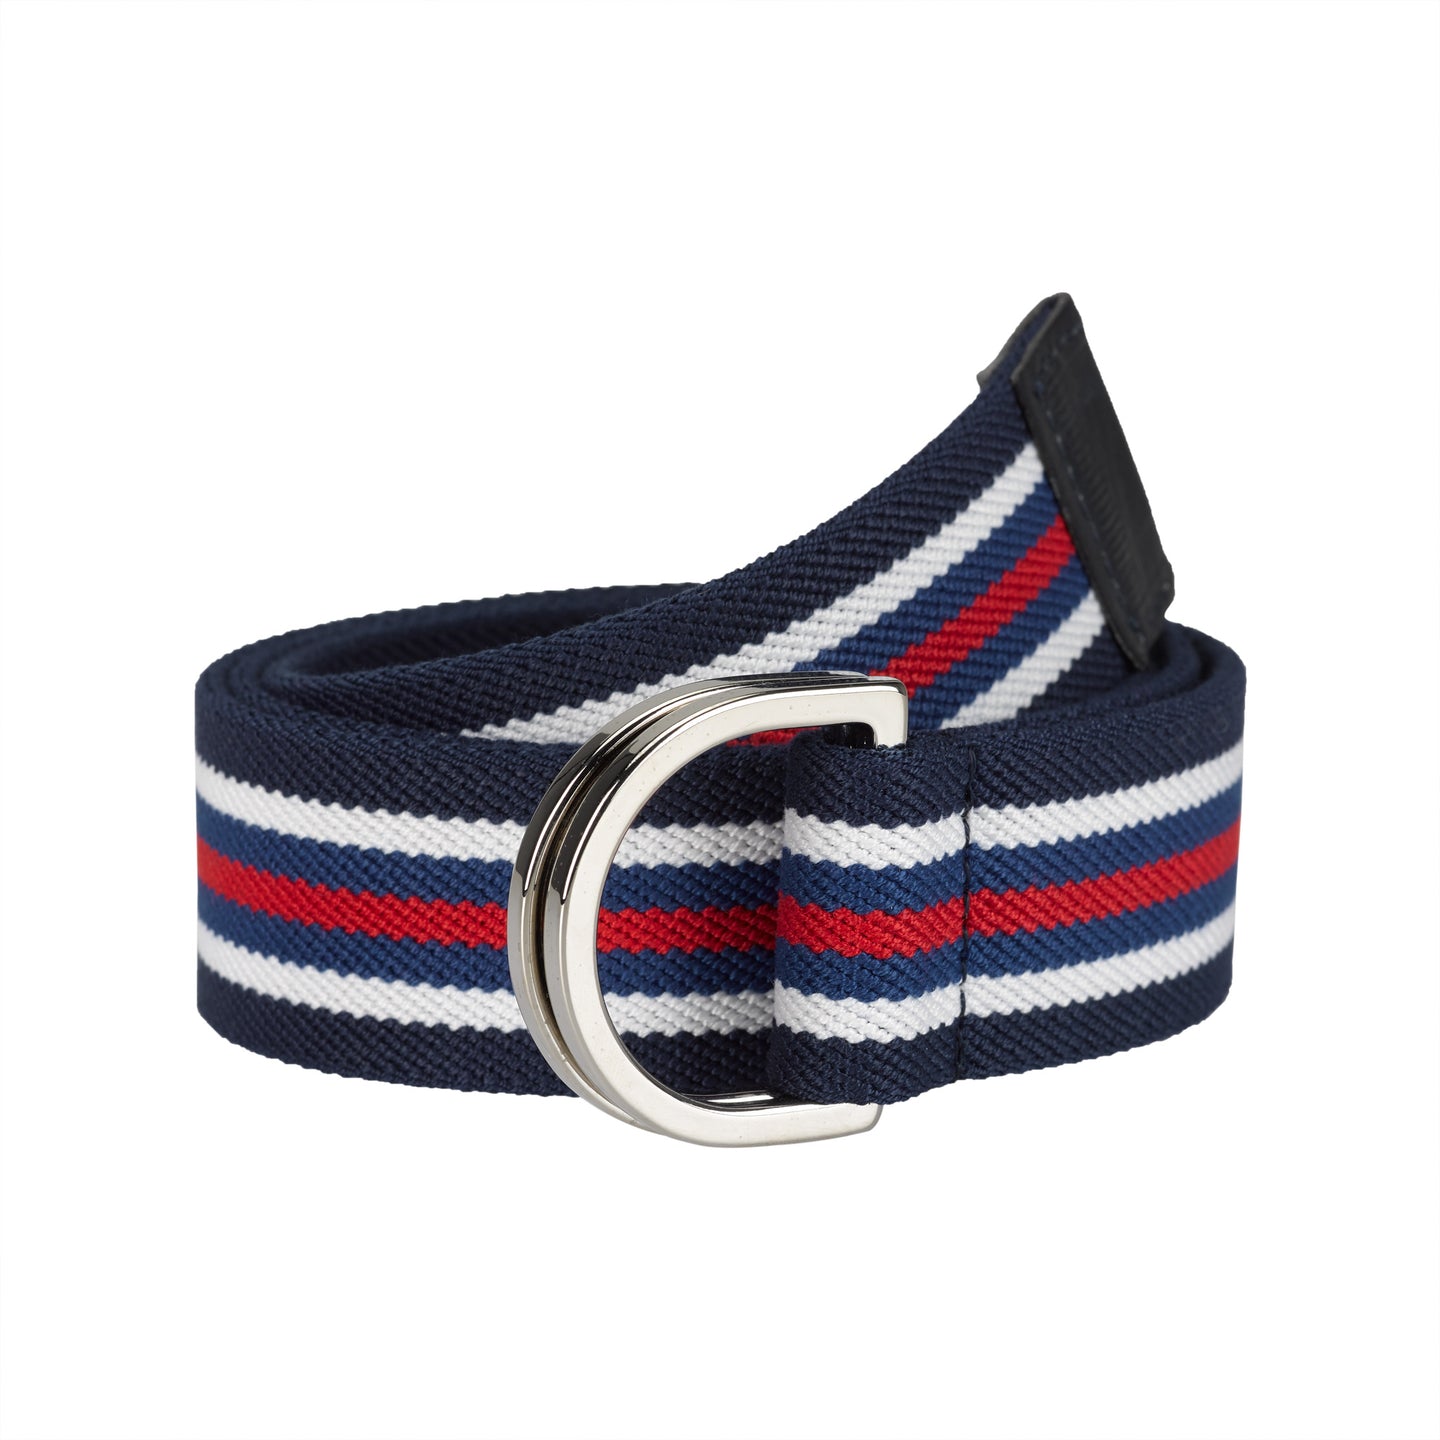 The Blueberry Striped Belt